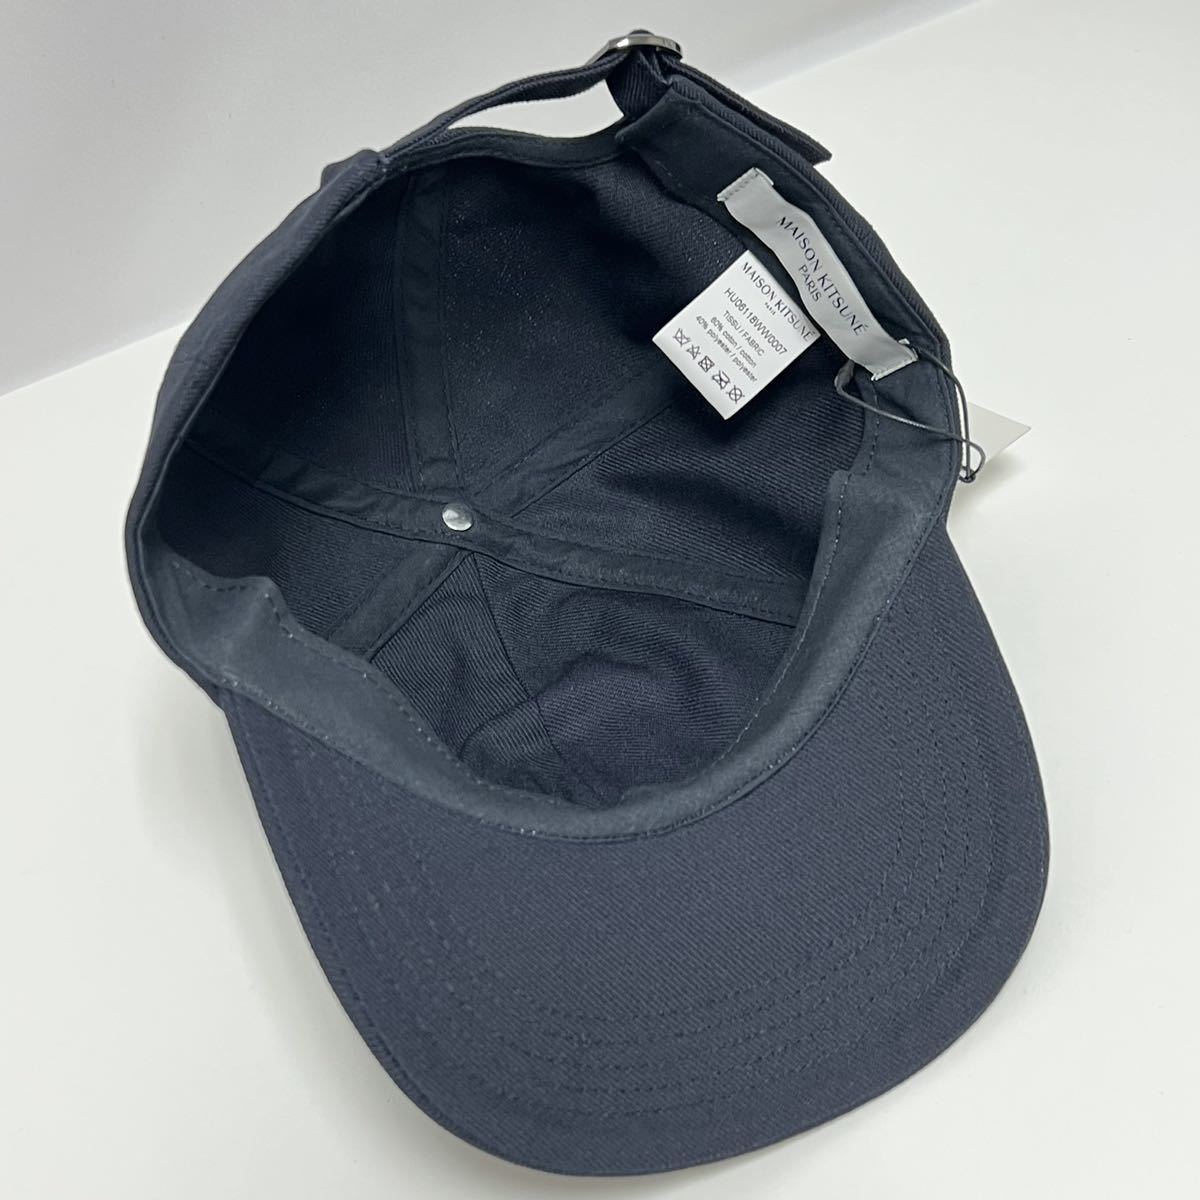  новый товар mezzo n лисица Large лиса head вышивка колпак шляпа CAP MAISON KITSUNE 6P шляпа CAP вышивка patch FOX лицо Logo темно-синий темно-синий 